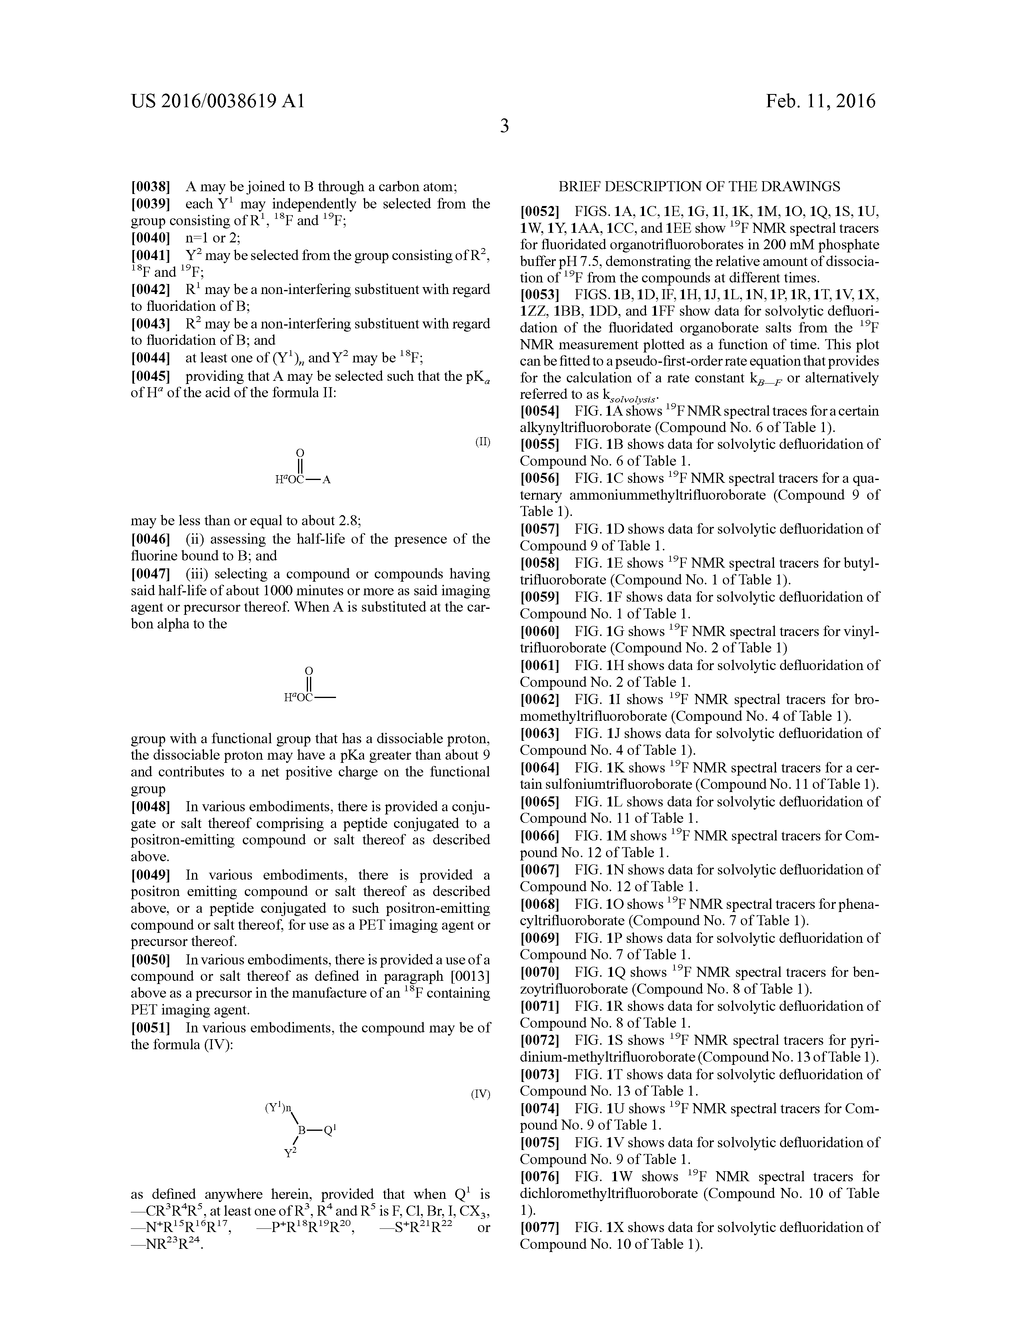 SUBSTITUTED ORGANOFLUOROBORATES AS IMAGING AGENTS - diagram, schematic, and image 17